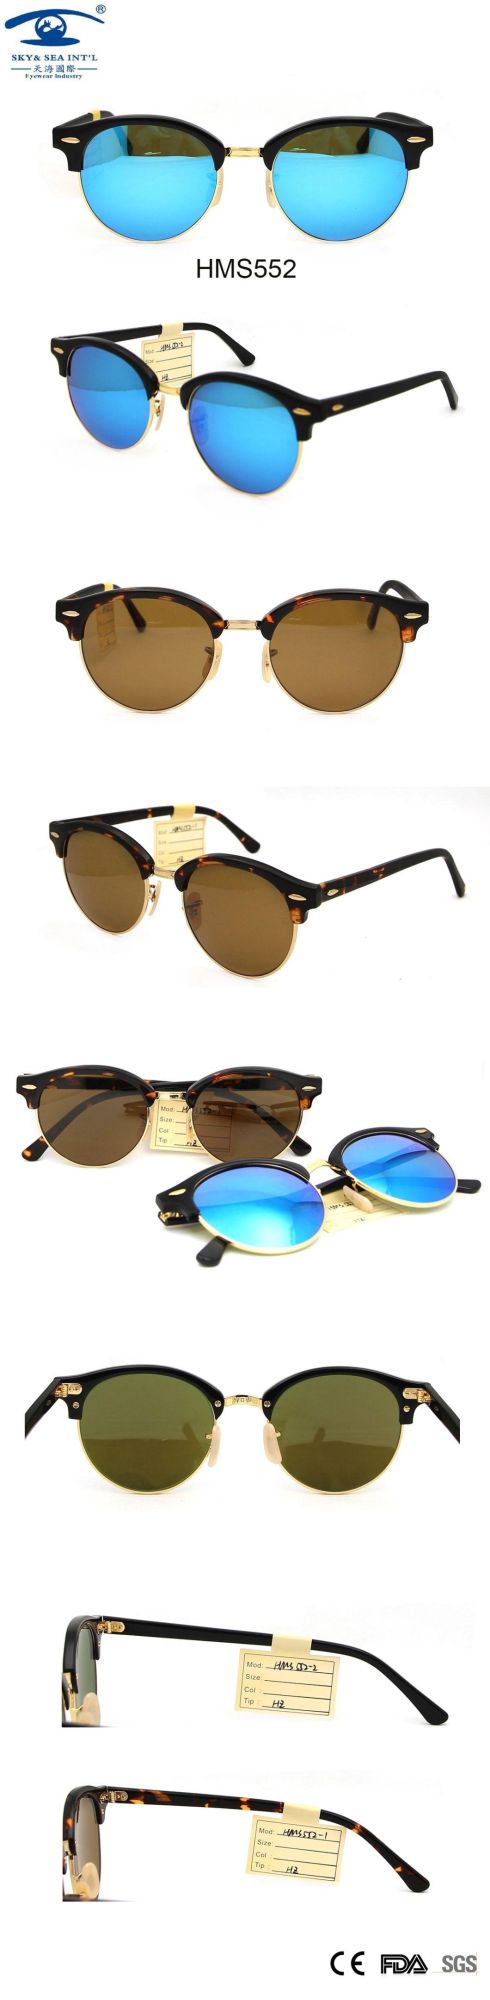 Ray Band Italy Design Fashion Acetate Sunglasses